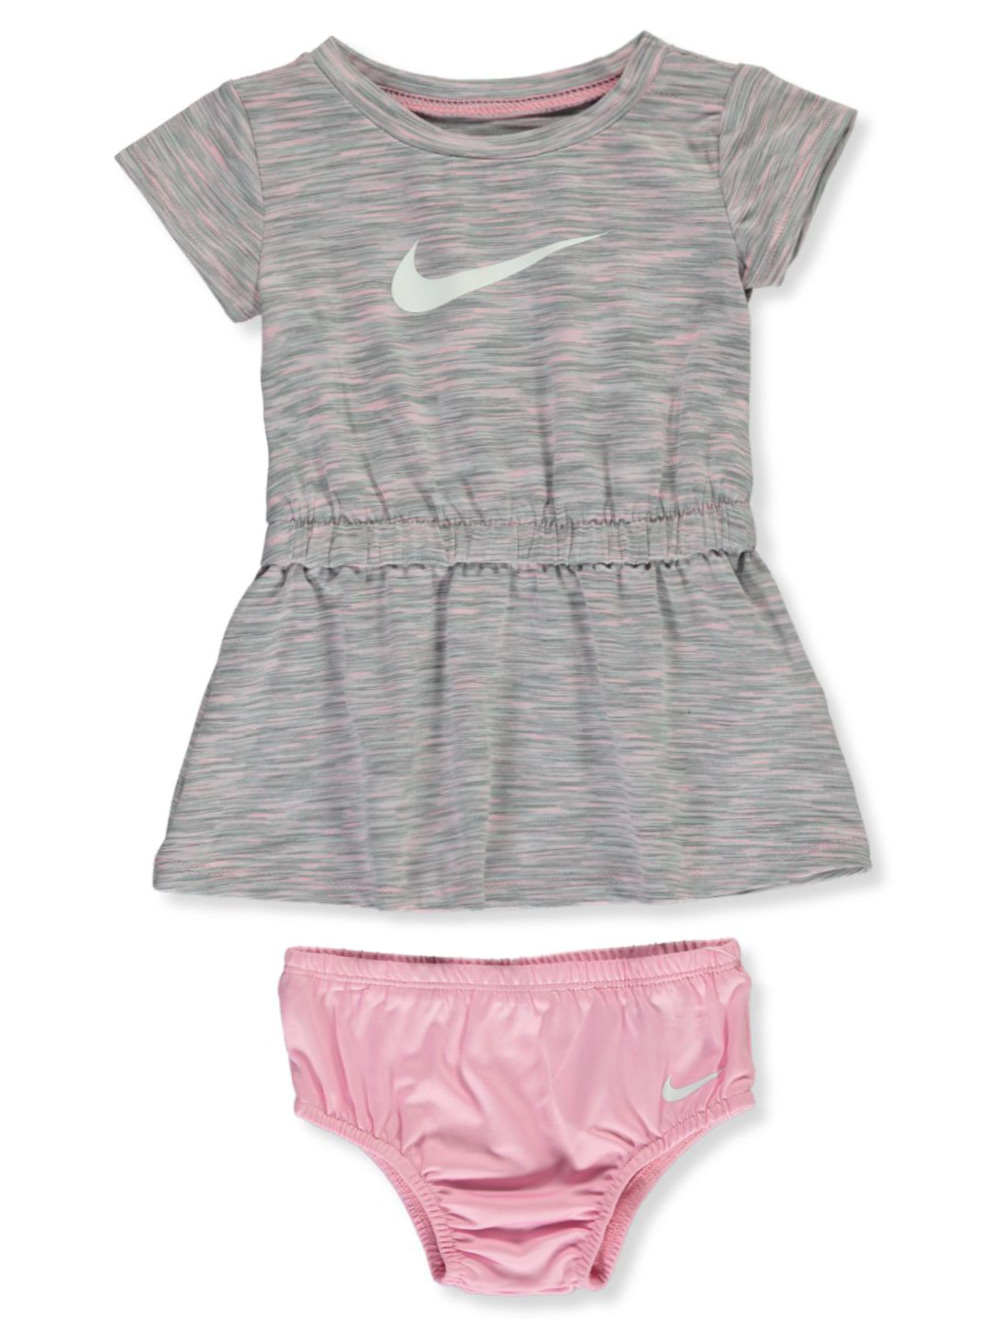 Baby Girls' 2-Piece Layette Set by Nike 